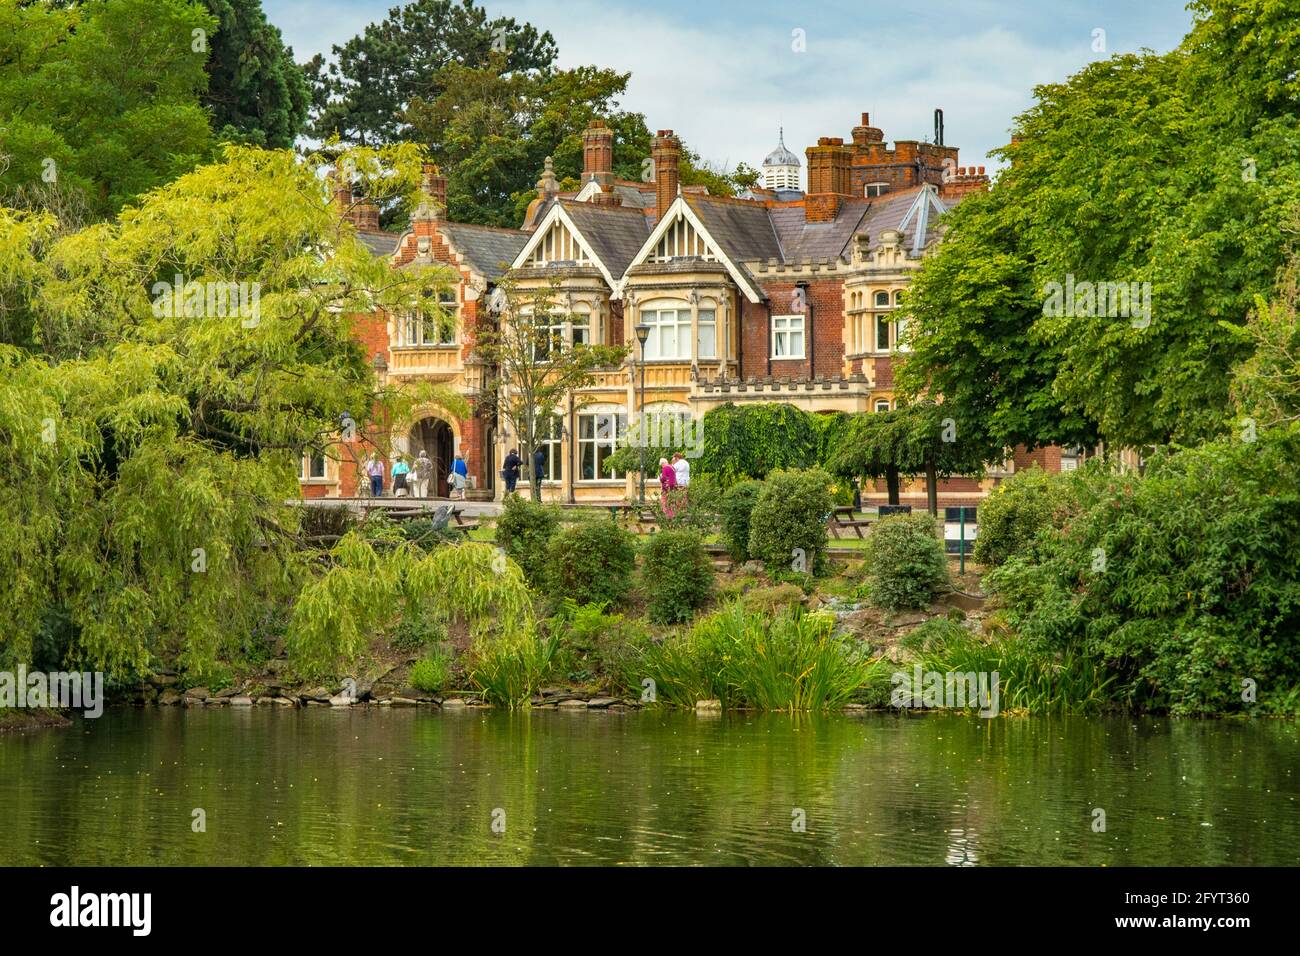 Bletchley Park Mansion, Milton Keynes, Buckinghamshire, England Stockfoto